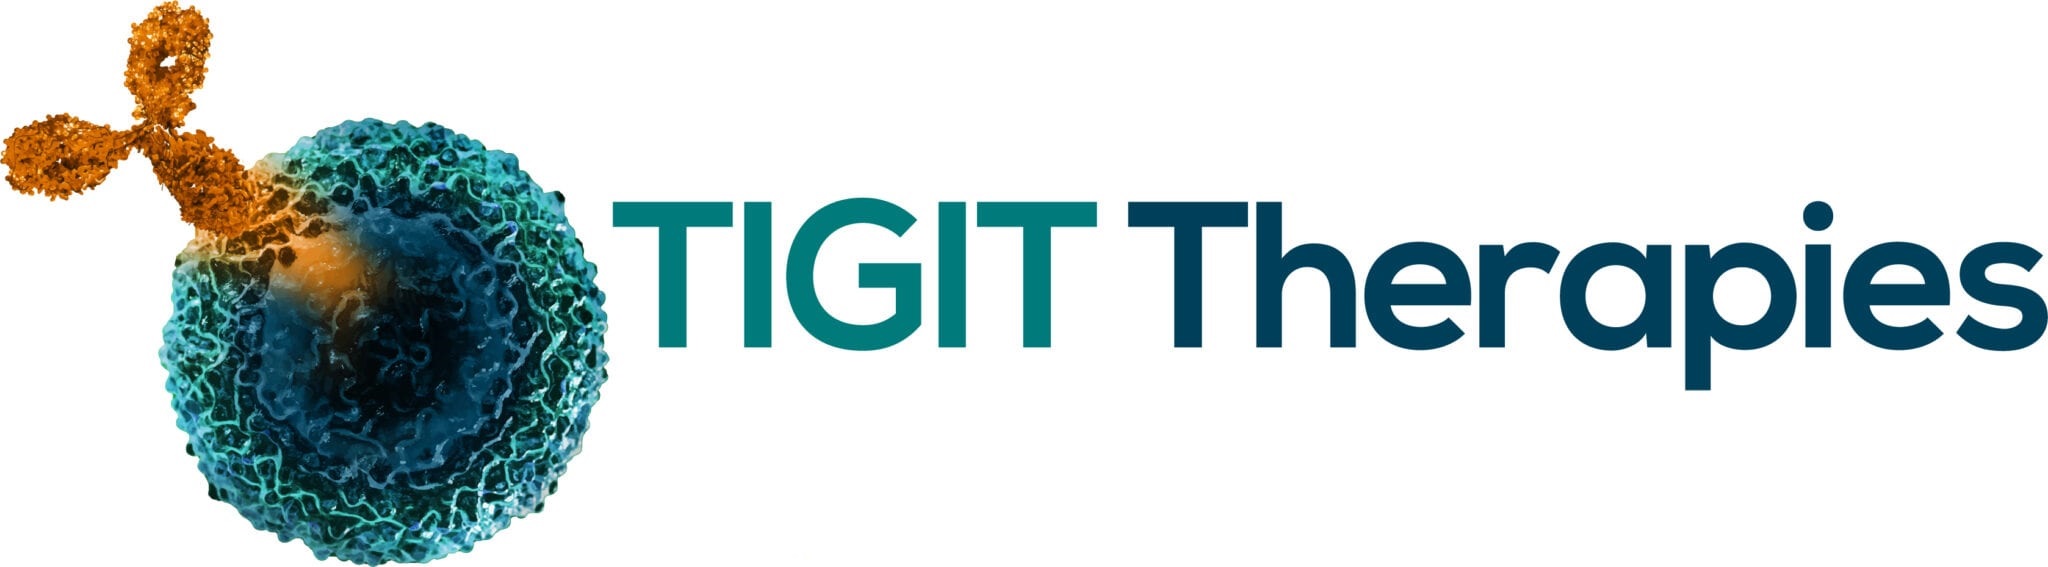 19890-TIGIT-Therapies-Summit-logo-FINAL-scaled